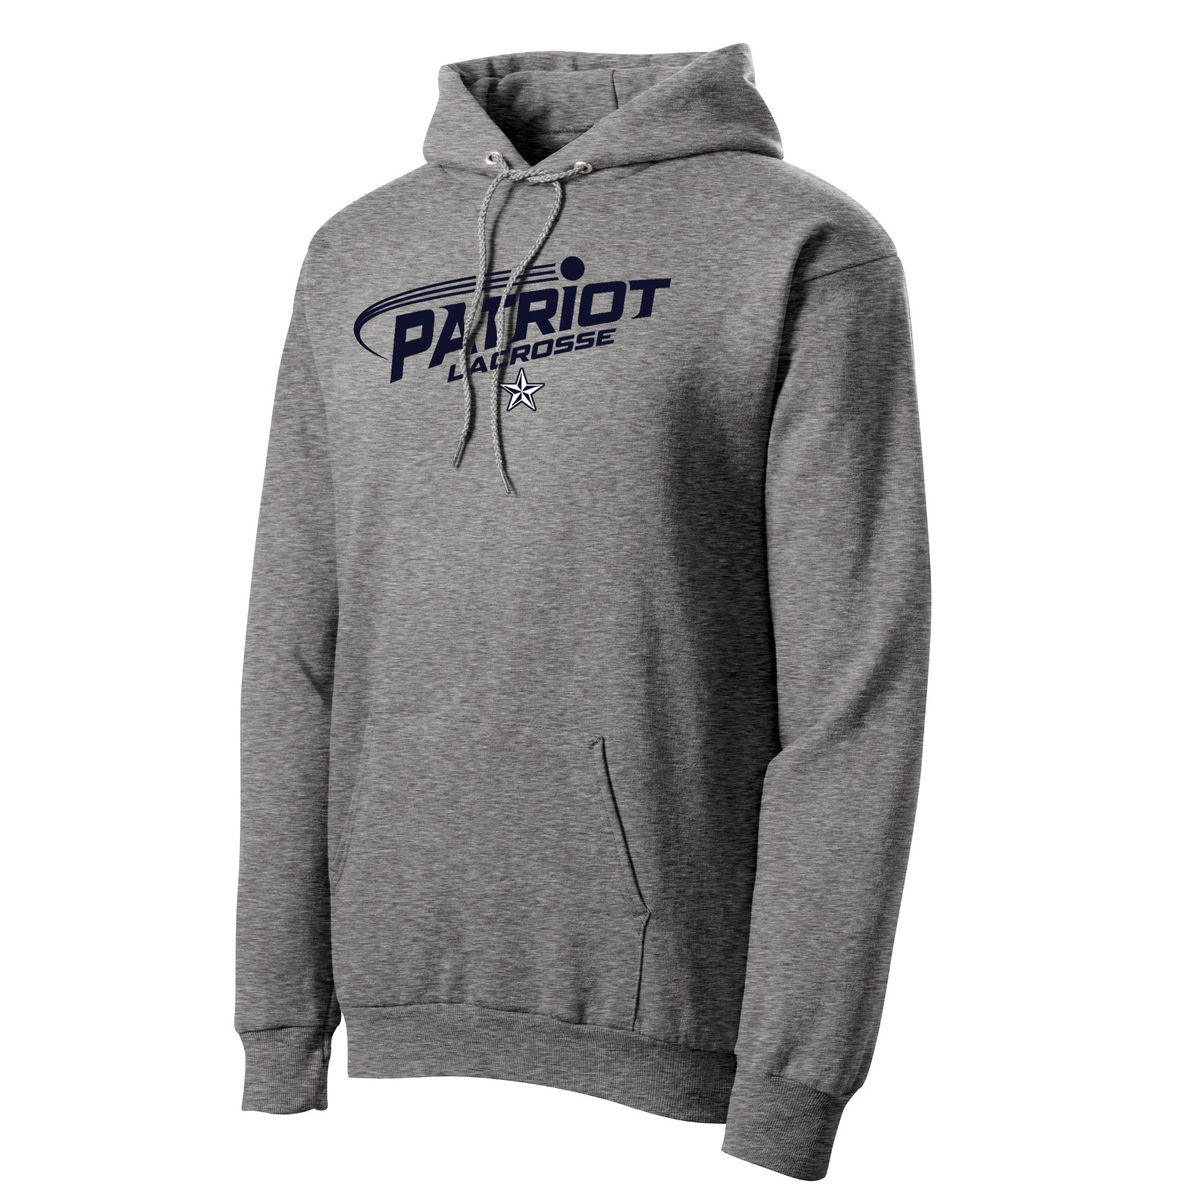 Patriot Lacrosse Sweatshirt